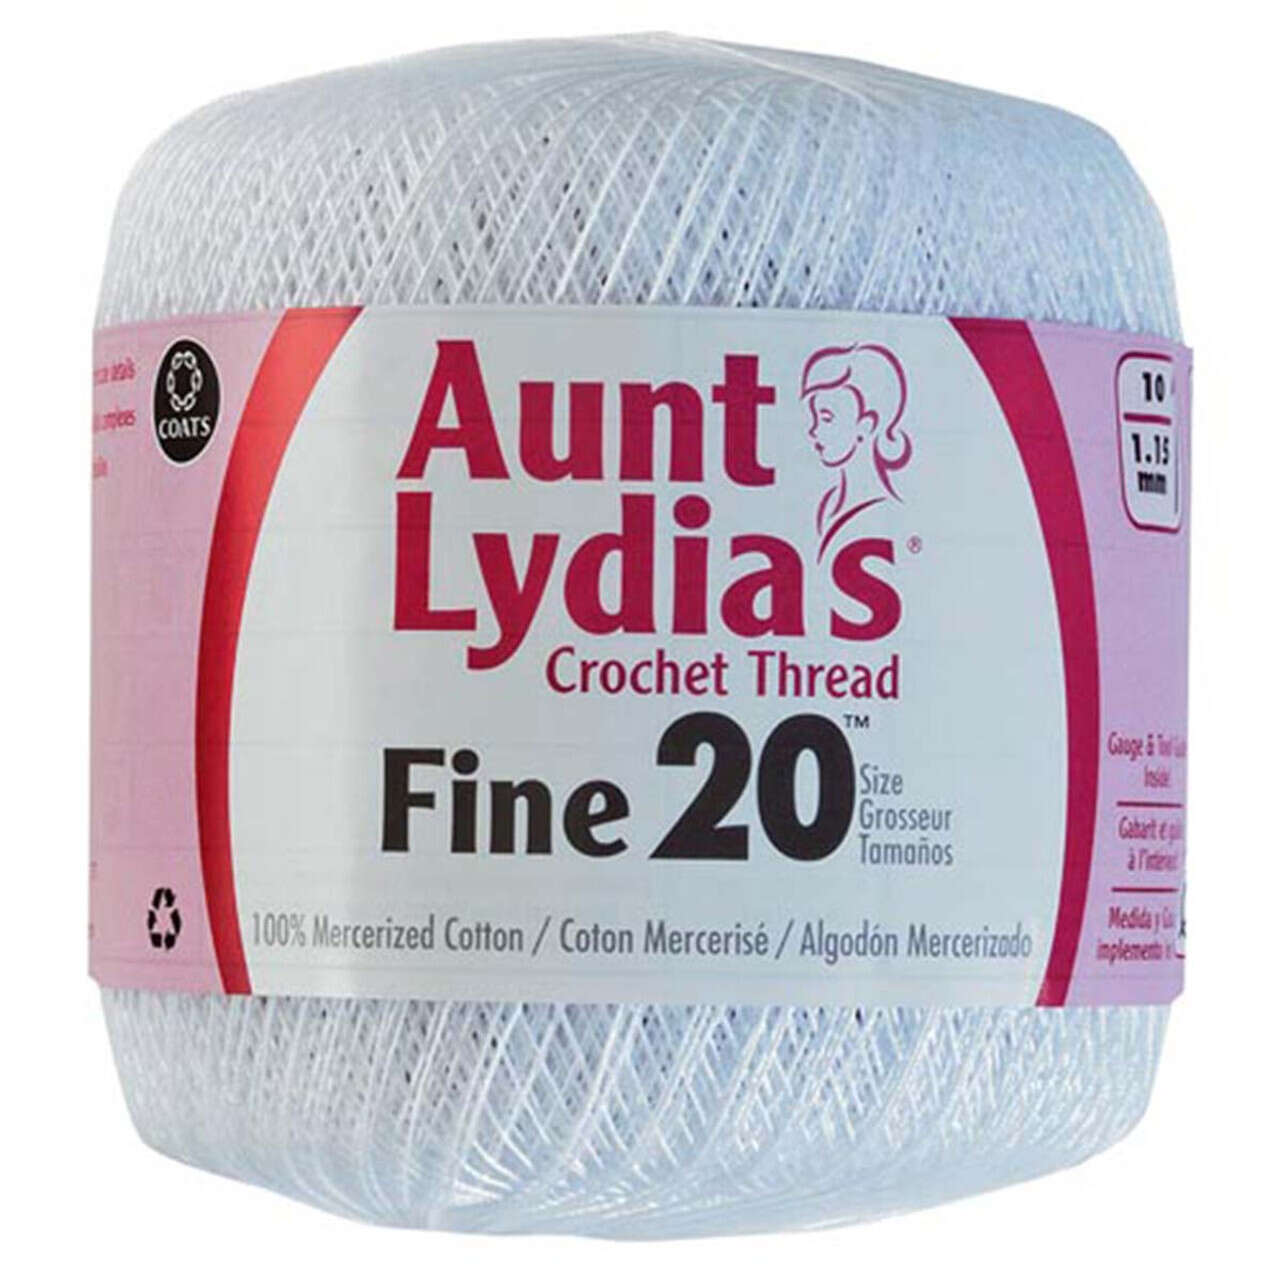 Aunt Lydia's Metallic Crochet Thread Size 10 Gold & Gold